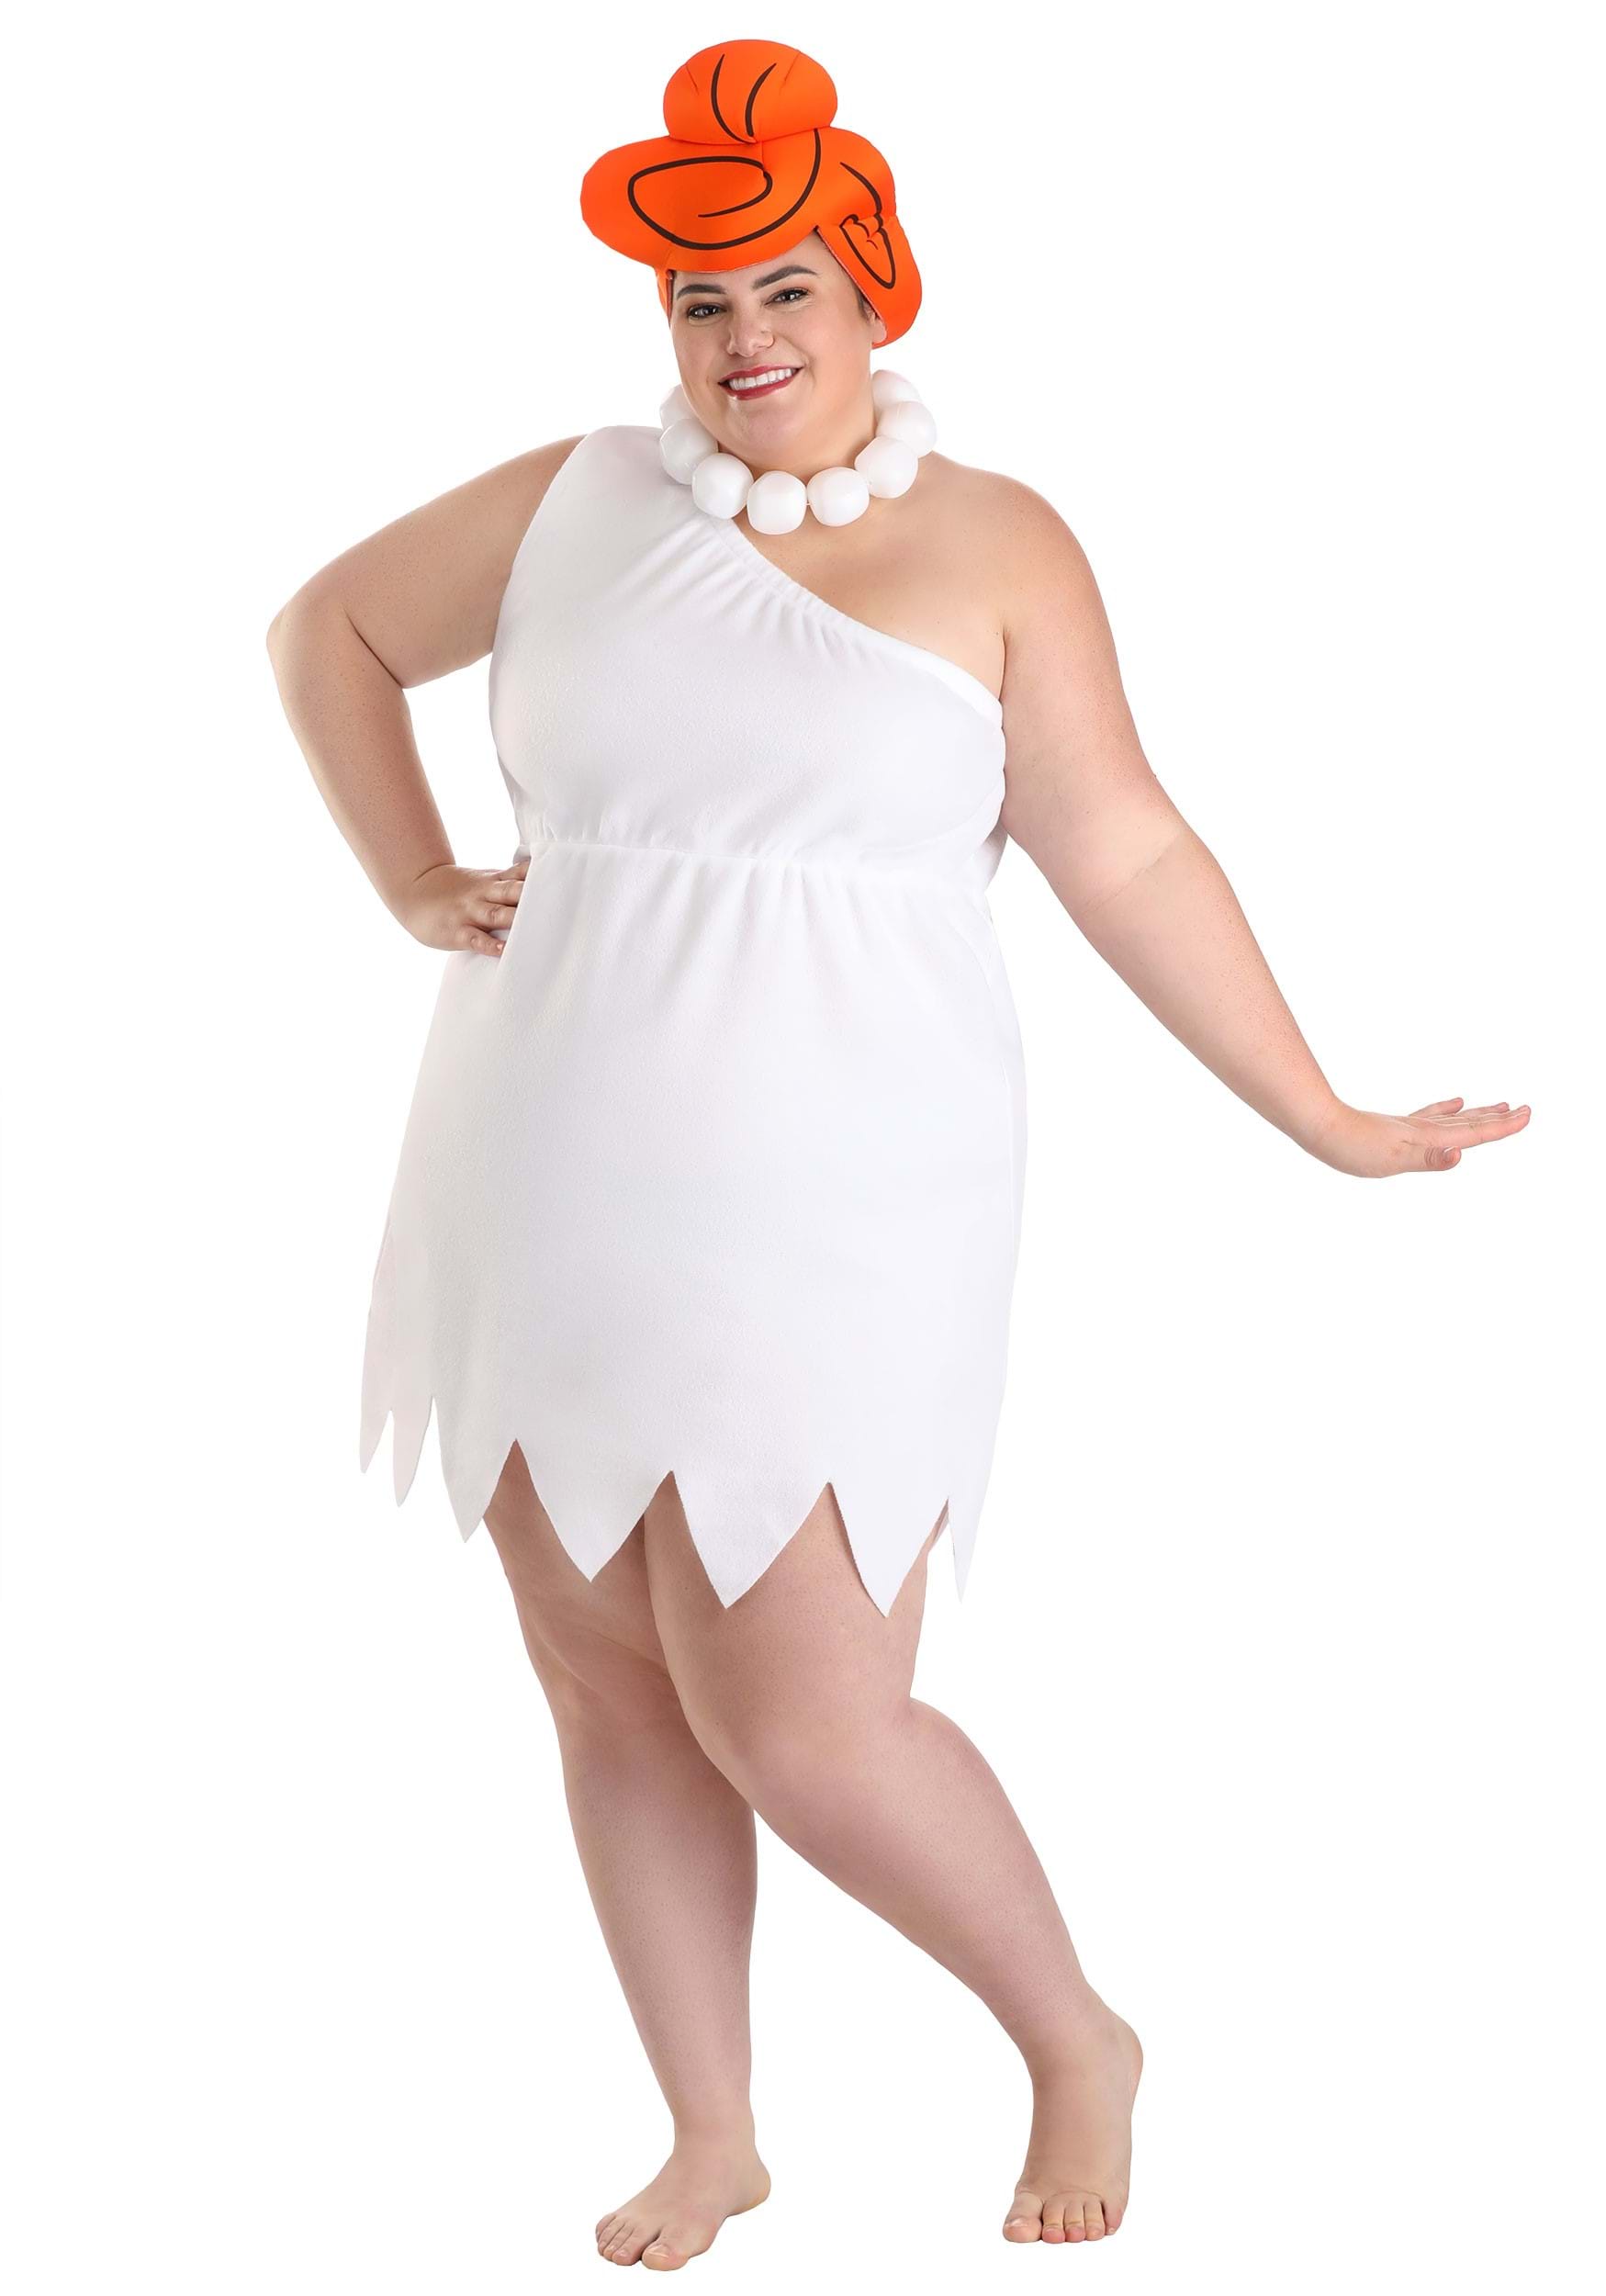 Plus Size Women's Wilma Flintstone Costume | Plus Size Costumes